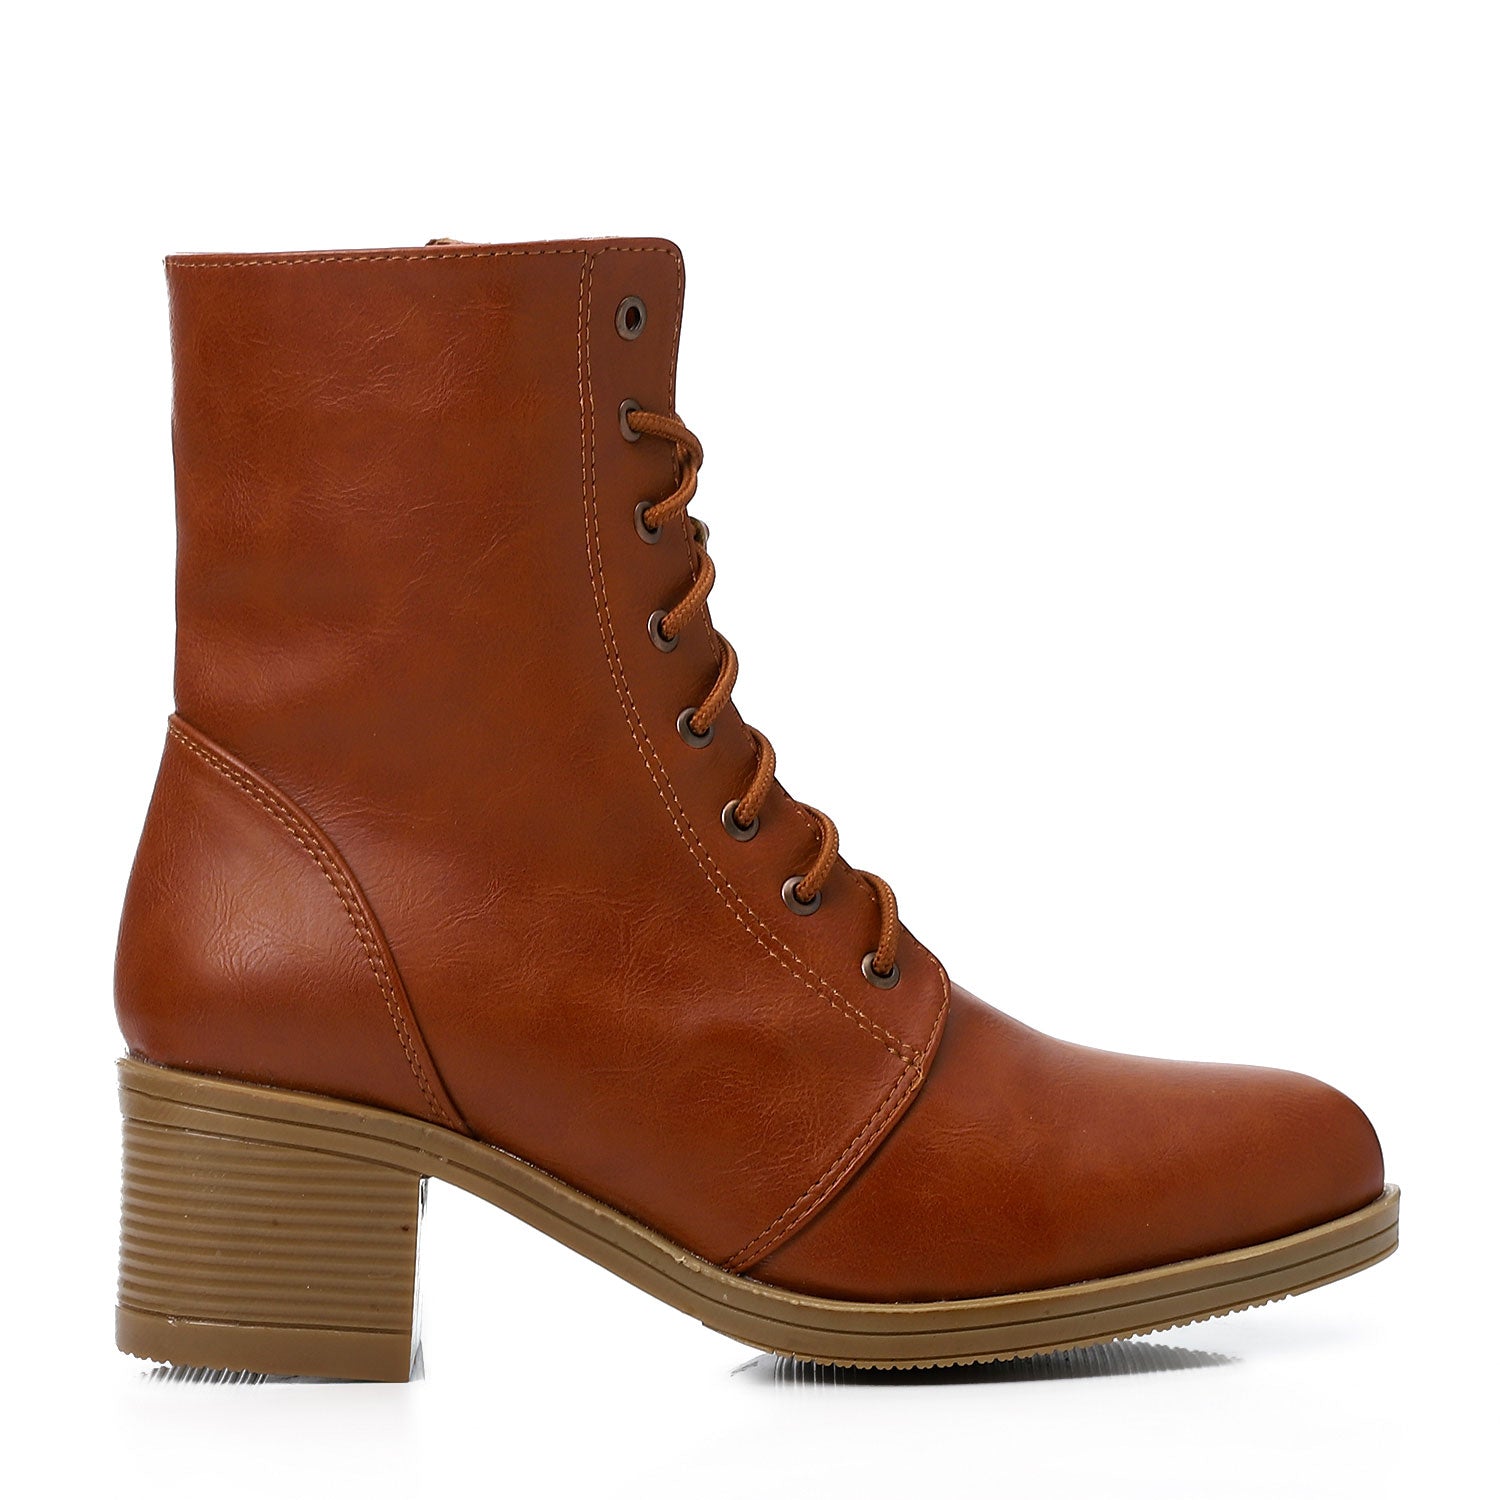 Women Boots (1134) - Xo Style